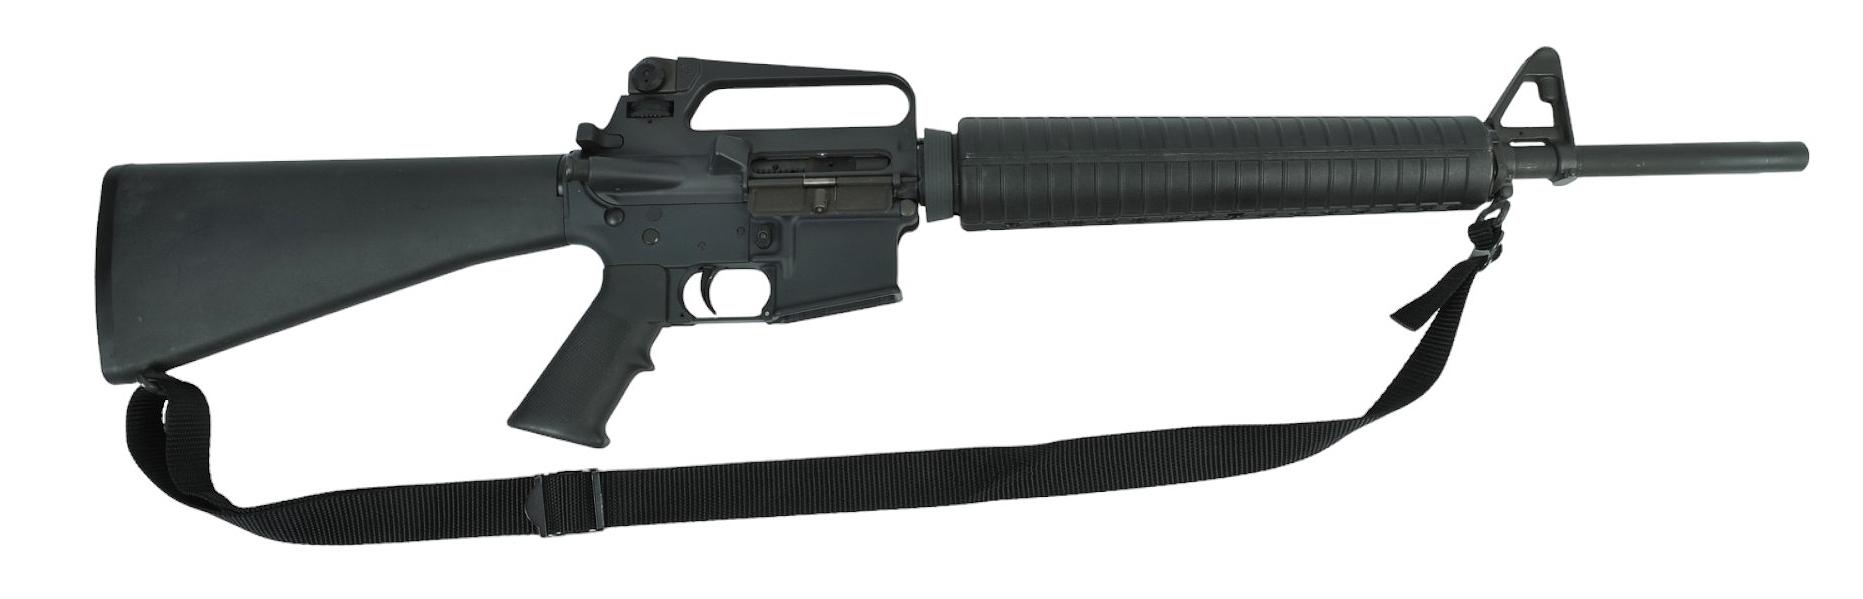 Colt Match Target HBAR AR-15 .223 Semi-Automatic Rifle - FFL #CMH006705 (MGX1)